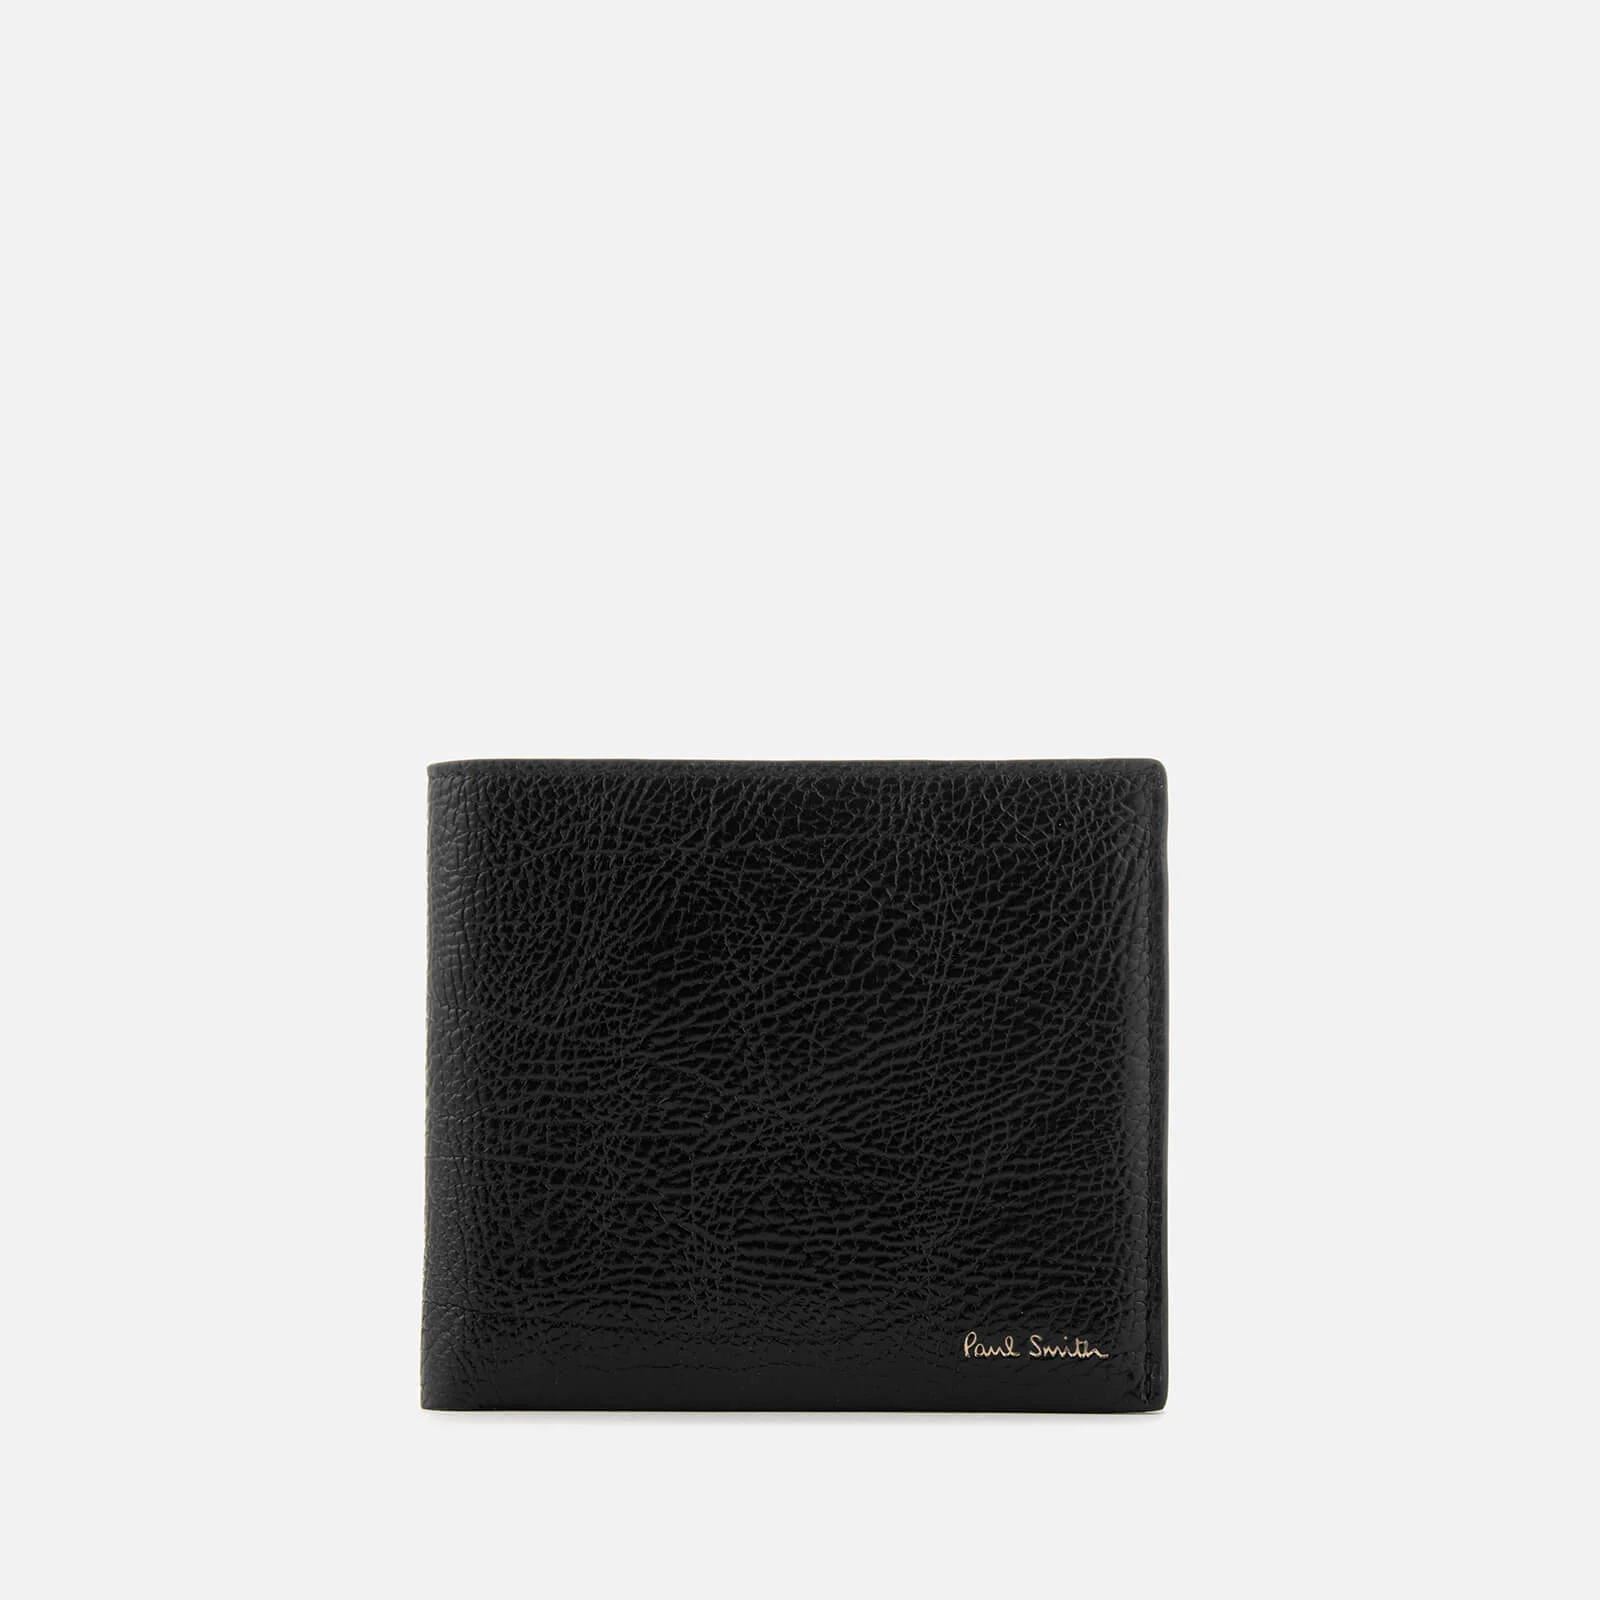 Paul Smith Accessories Men's Leather Billfold Wallet - Black Image 1